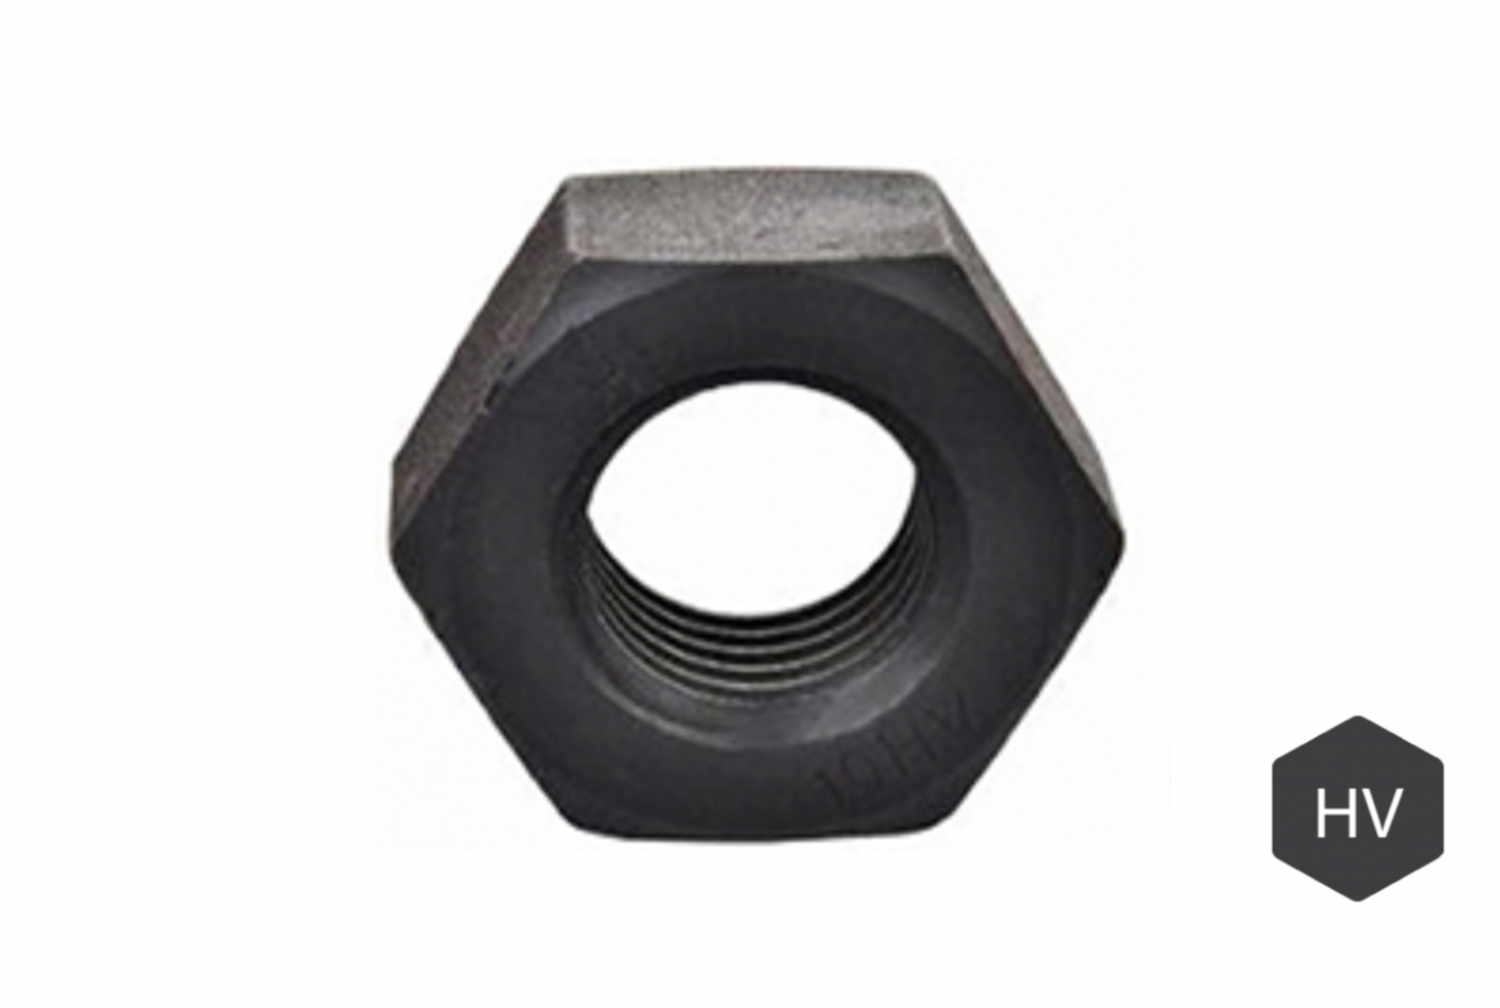 DIN 6915/EN 14399-4 10 Fram high-strength hexagon nut